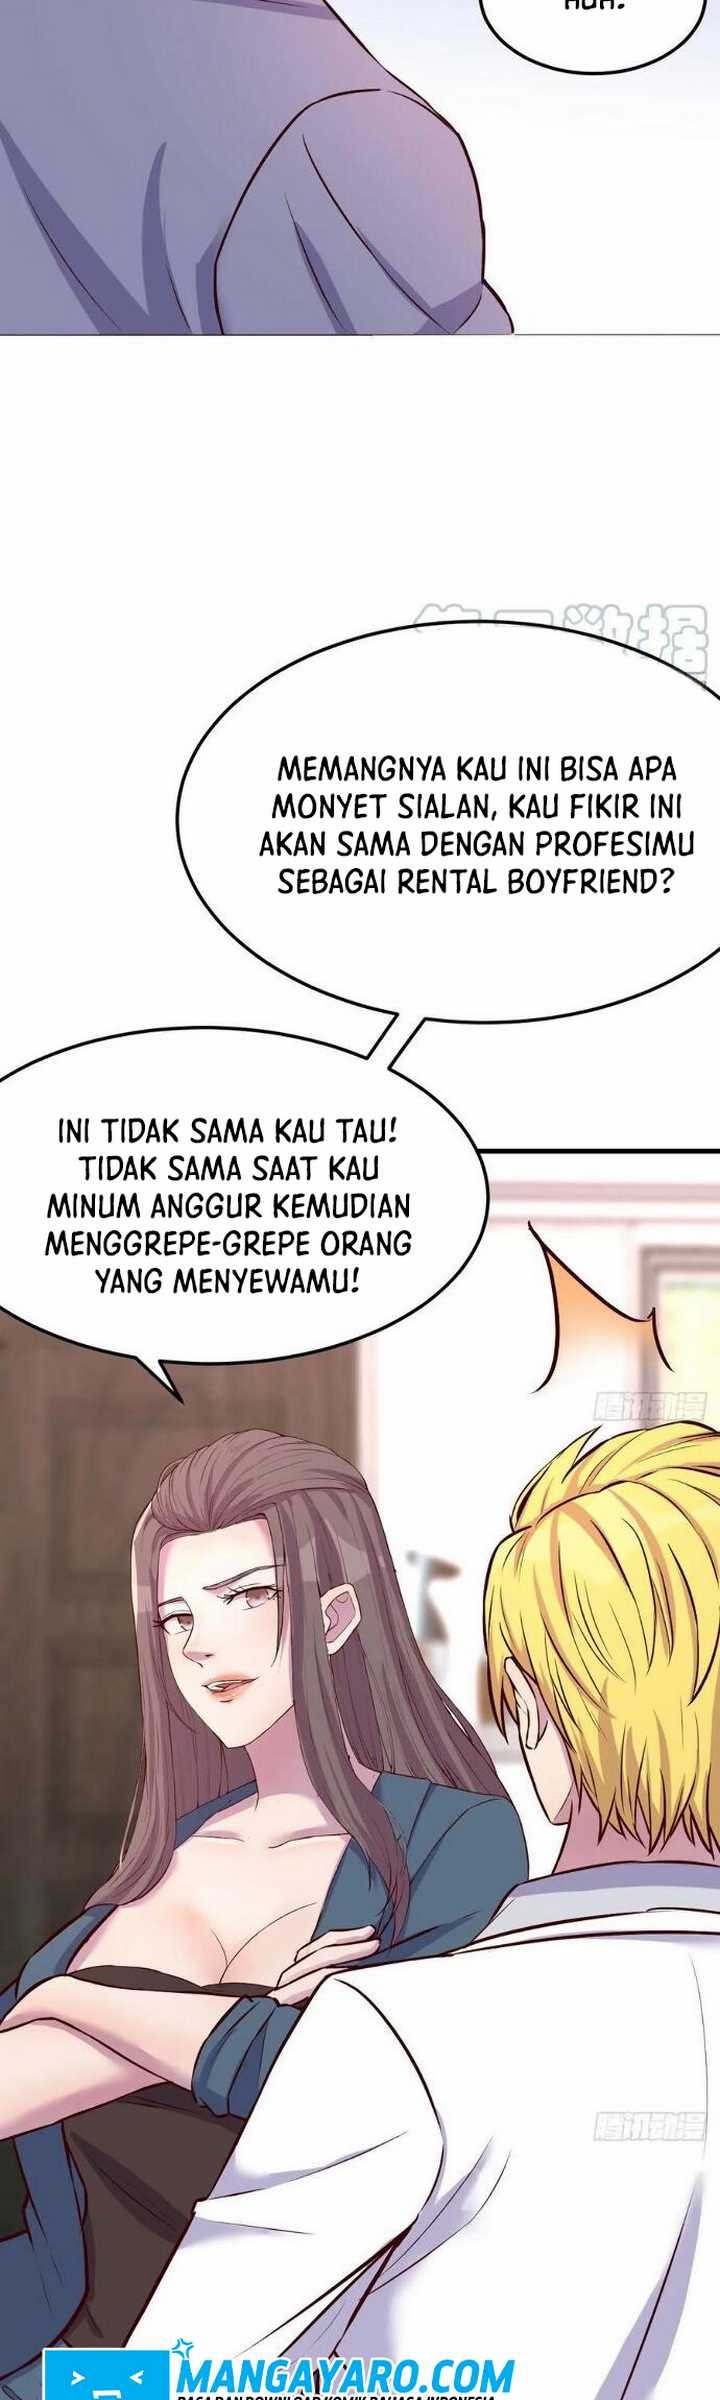 Rental Boyfriend Chapter 25